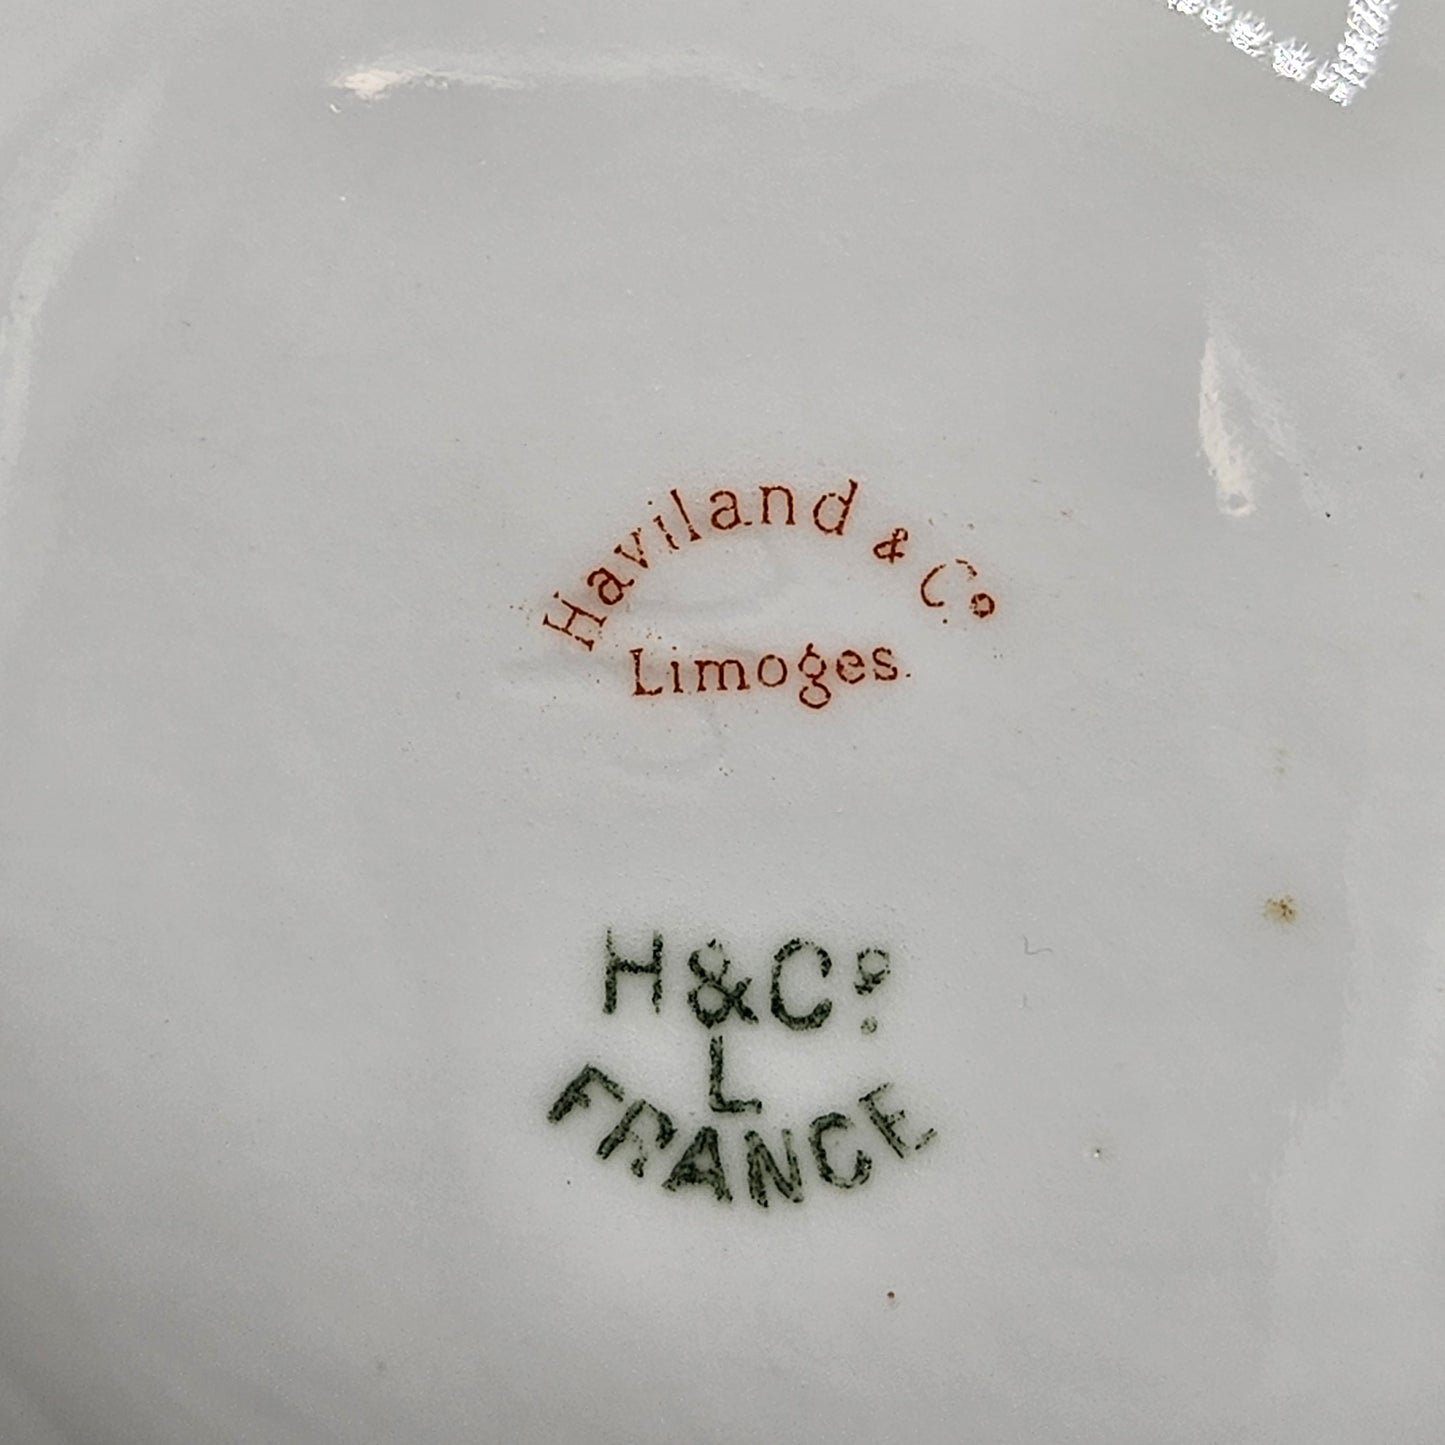 Haviland & Co Limoges Porcelain Oyster Plate with Dogwood Blossoms